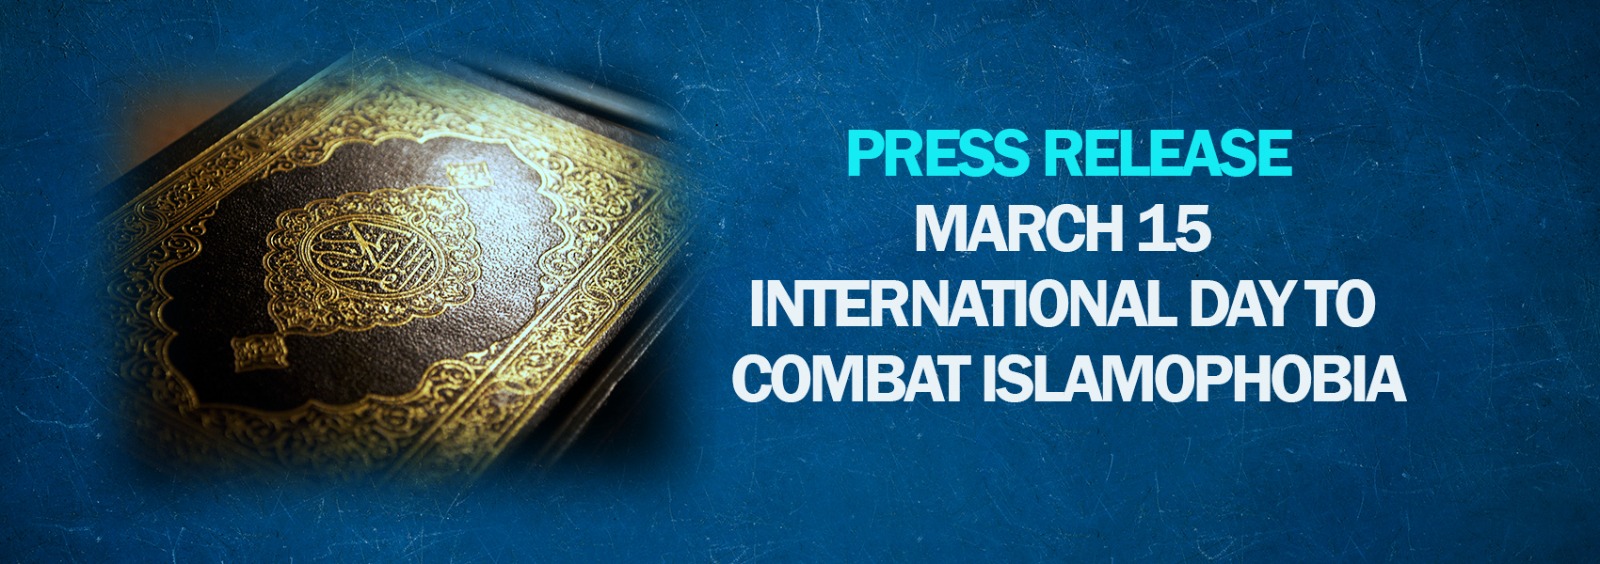 March 15 International Day to Combat Islamophobia